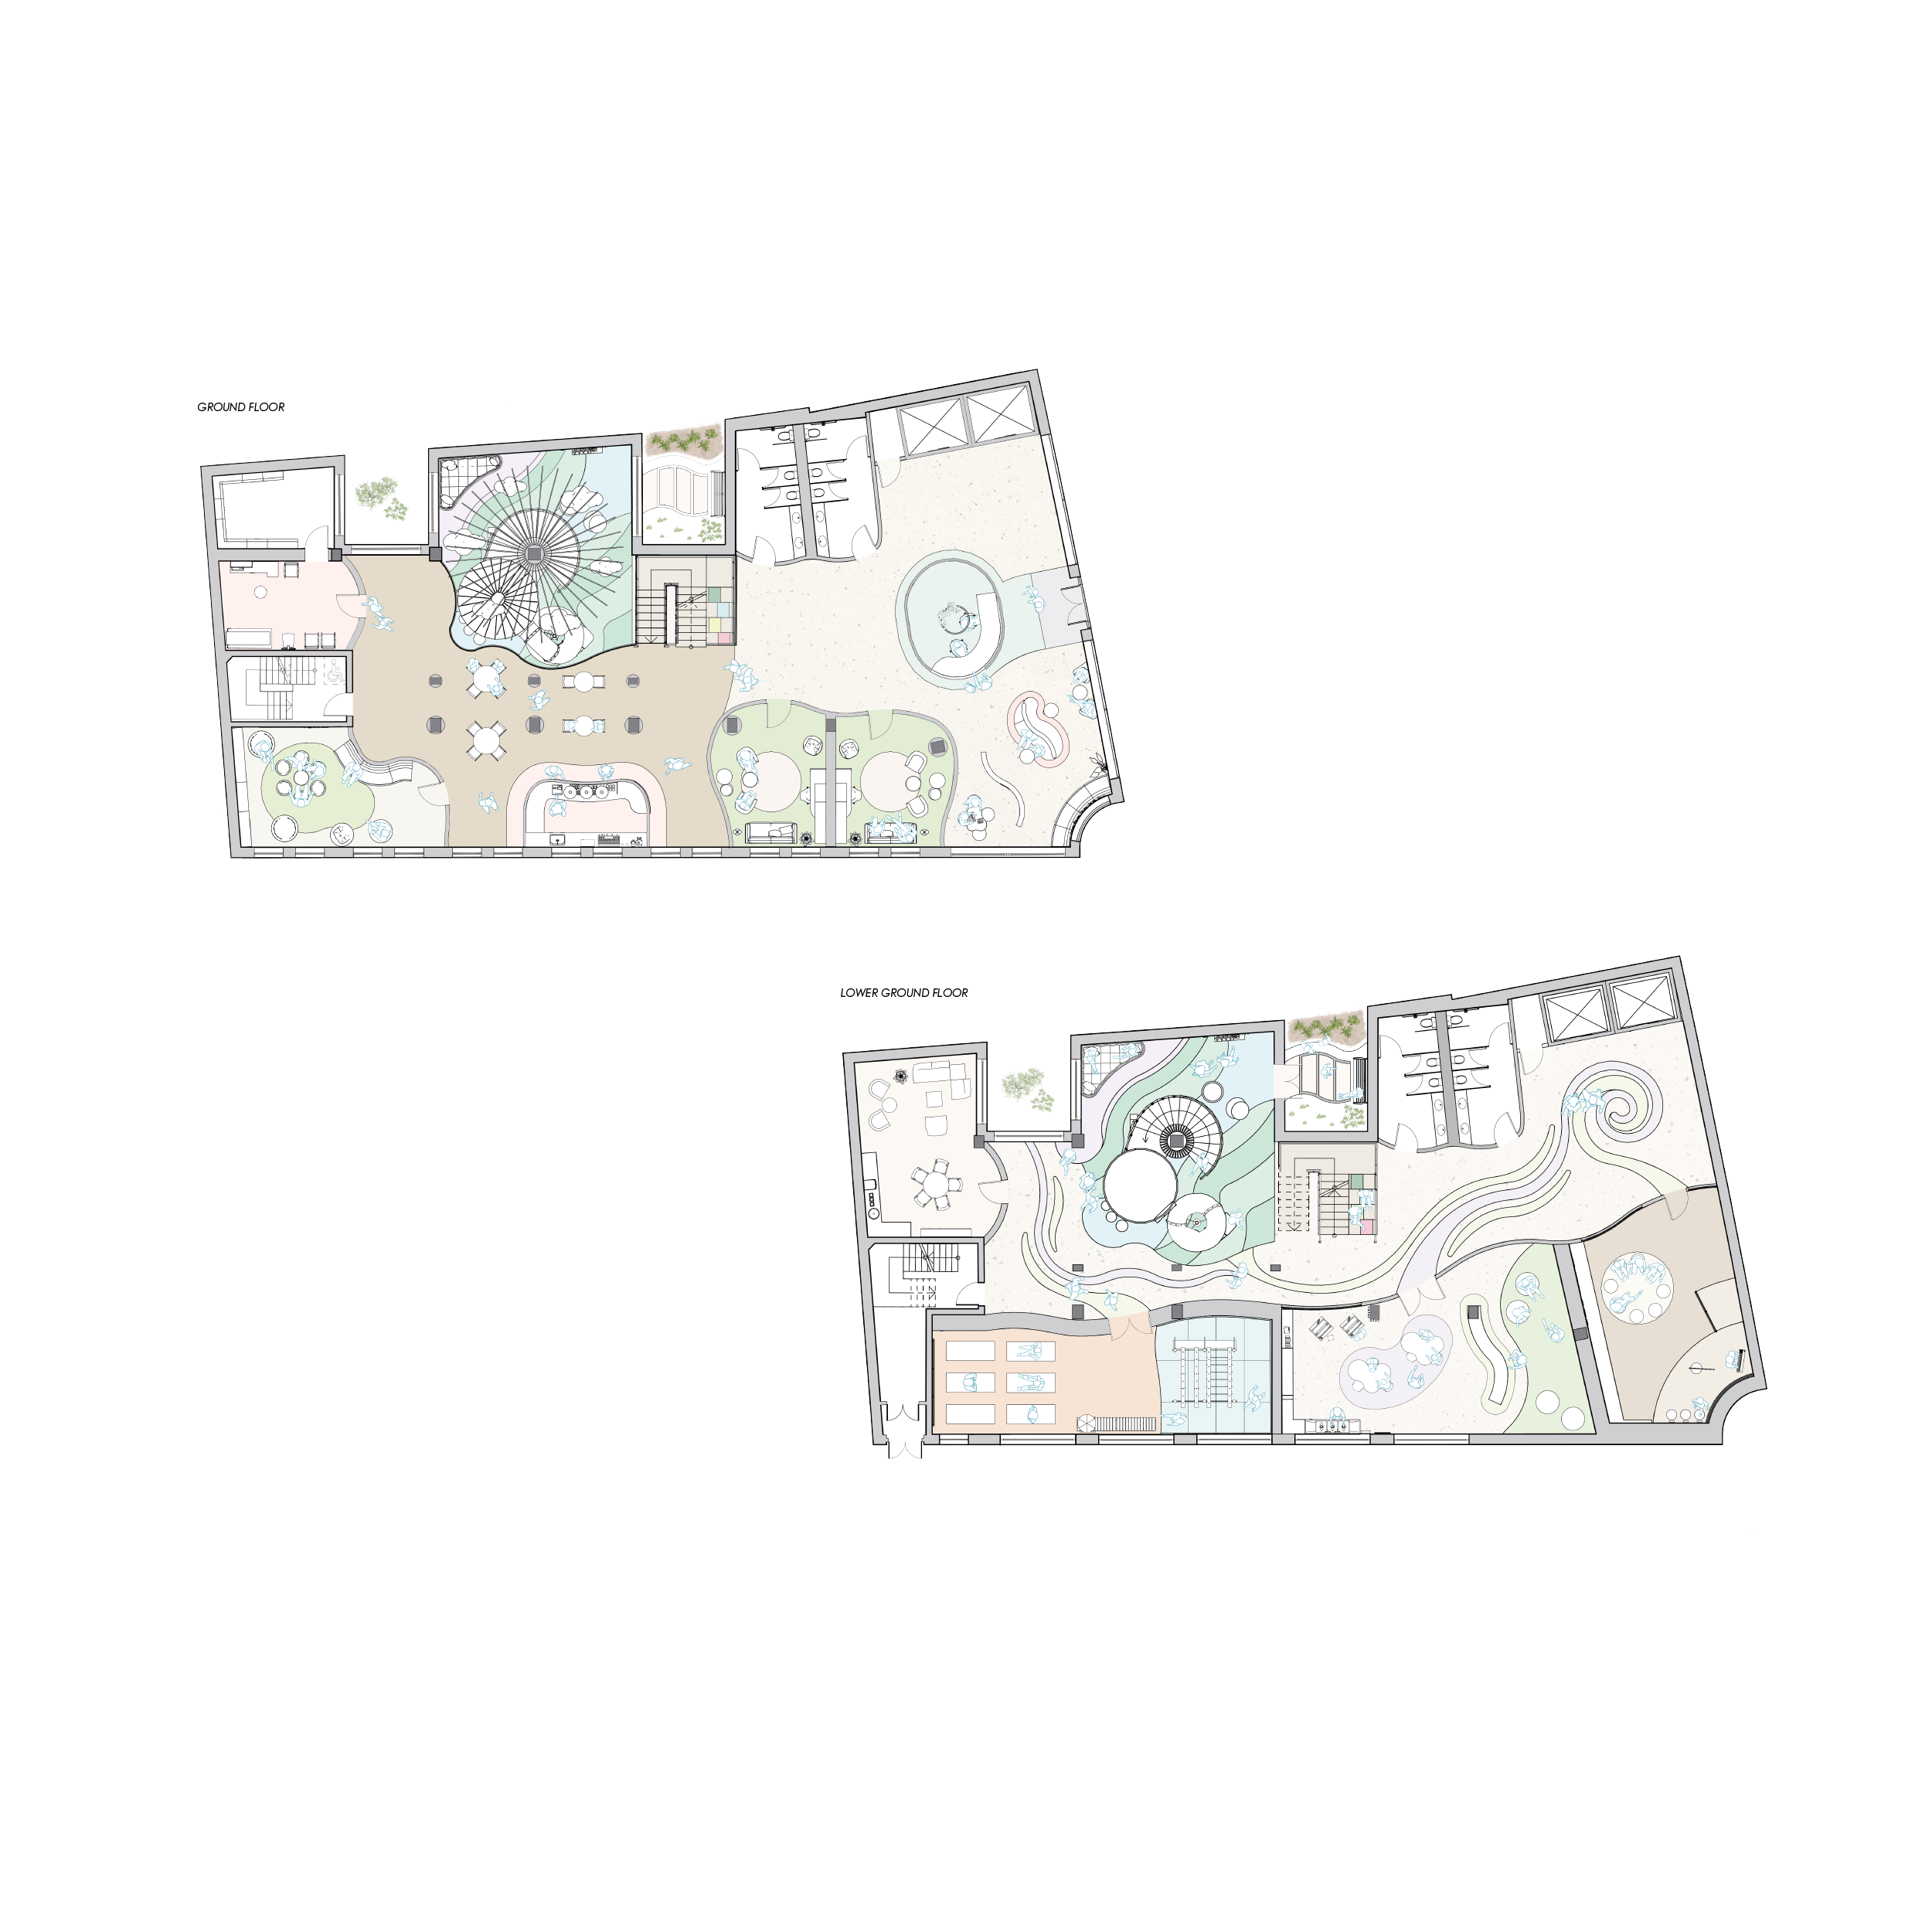 Rendered plan views showing floorplan by Nada Abu-Seido showing details of the space being utilised